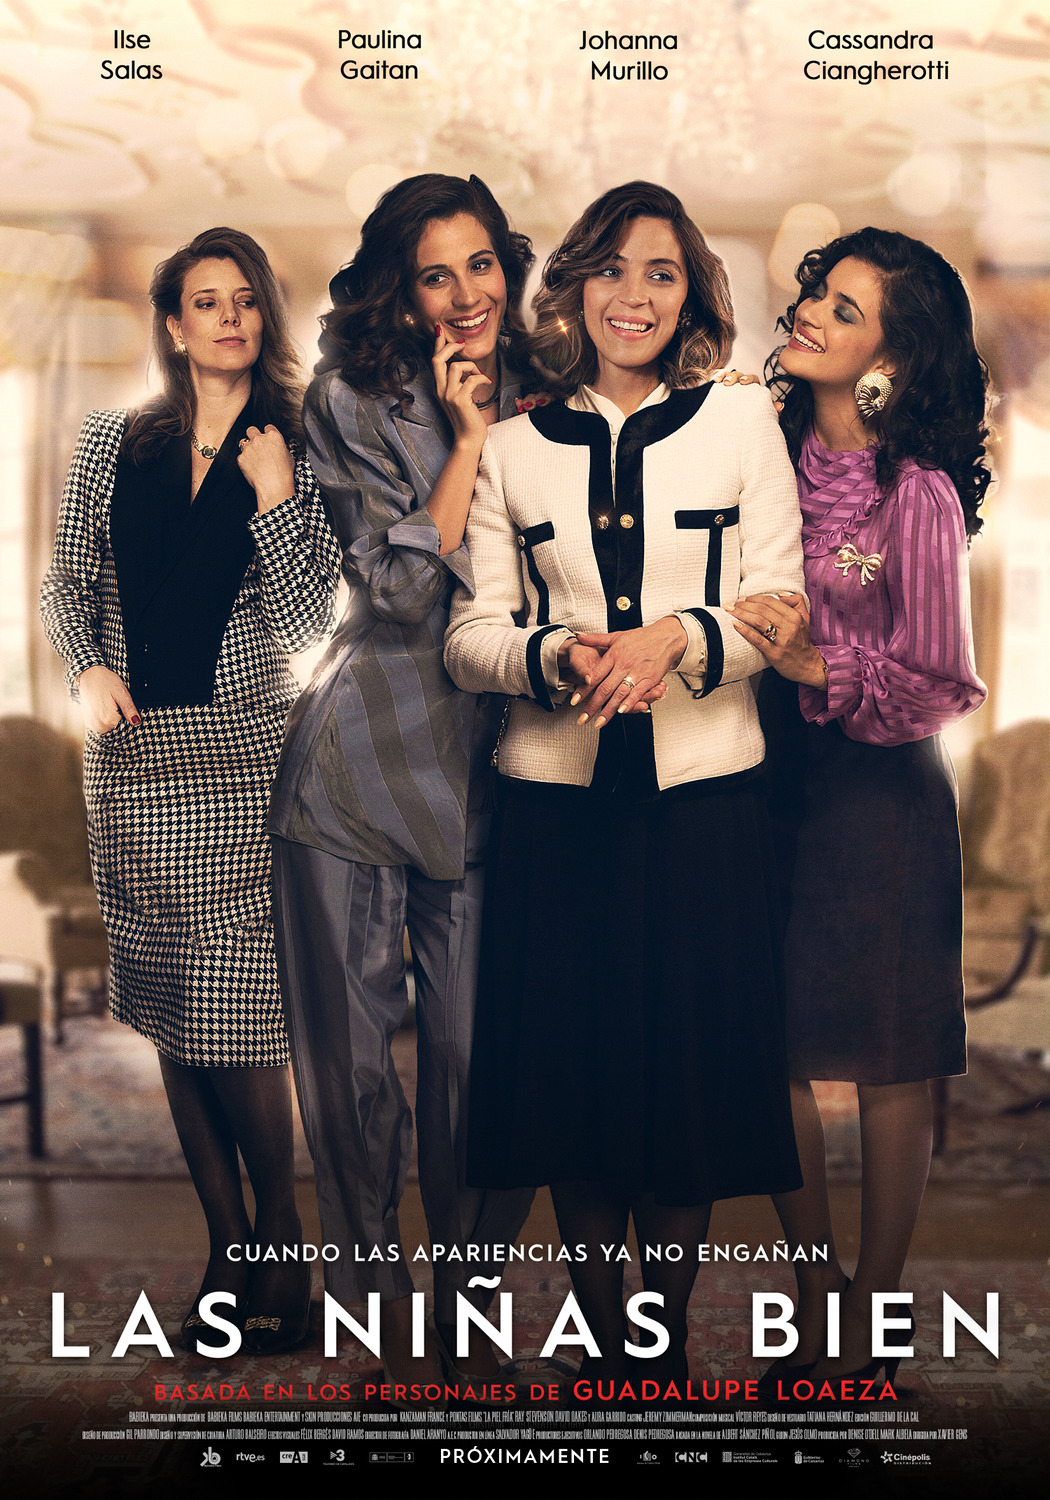 Extra Large Movie Poster Image for Las niñas bien (#4 of 16)